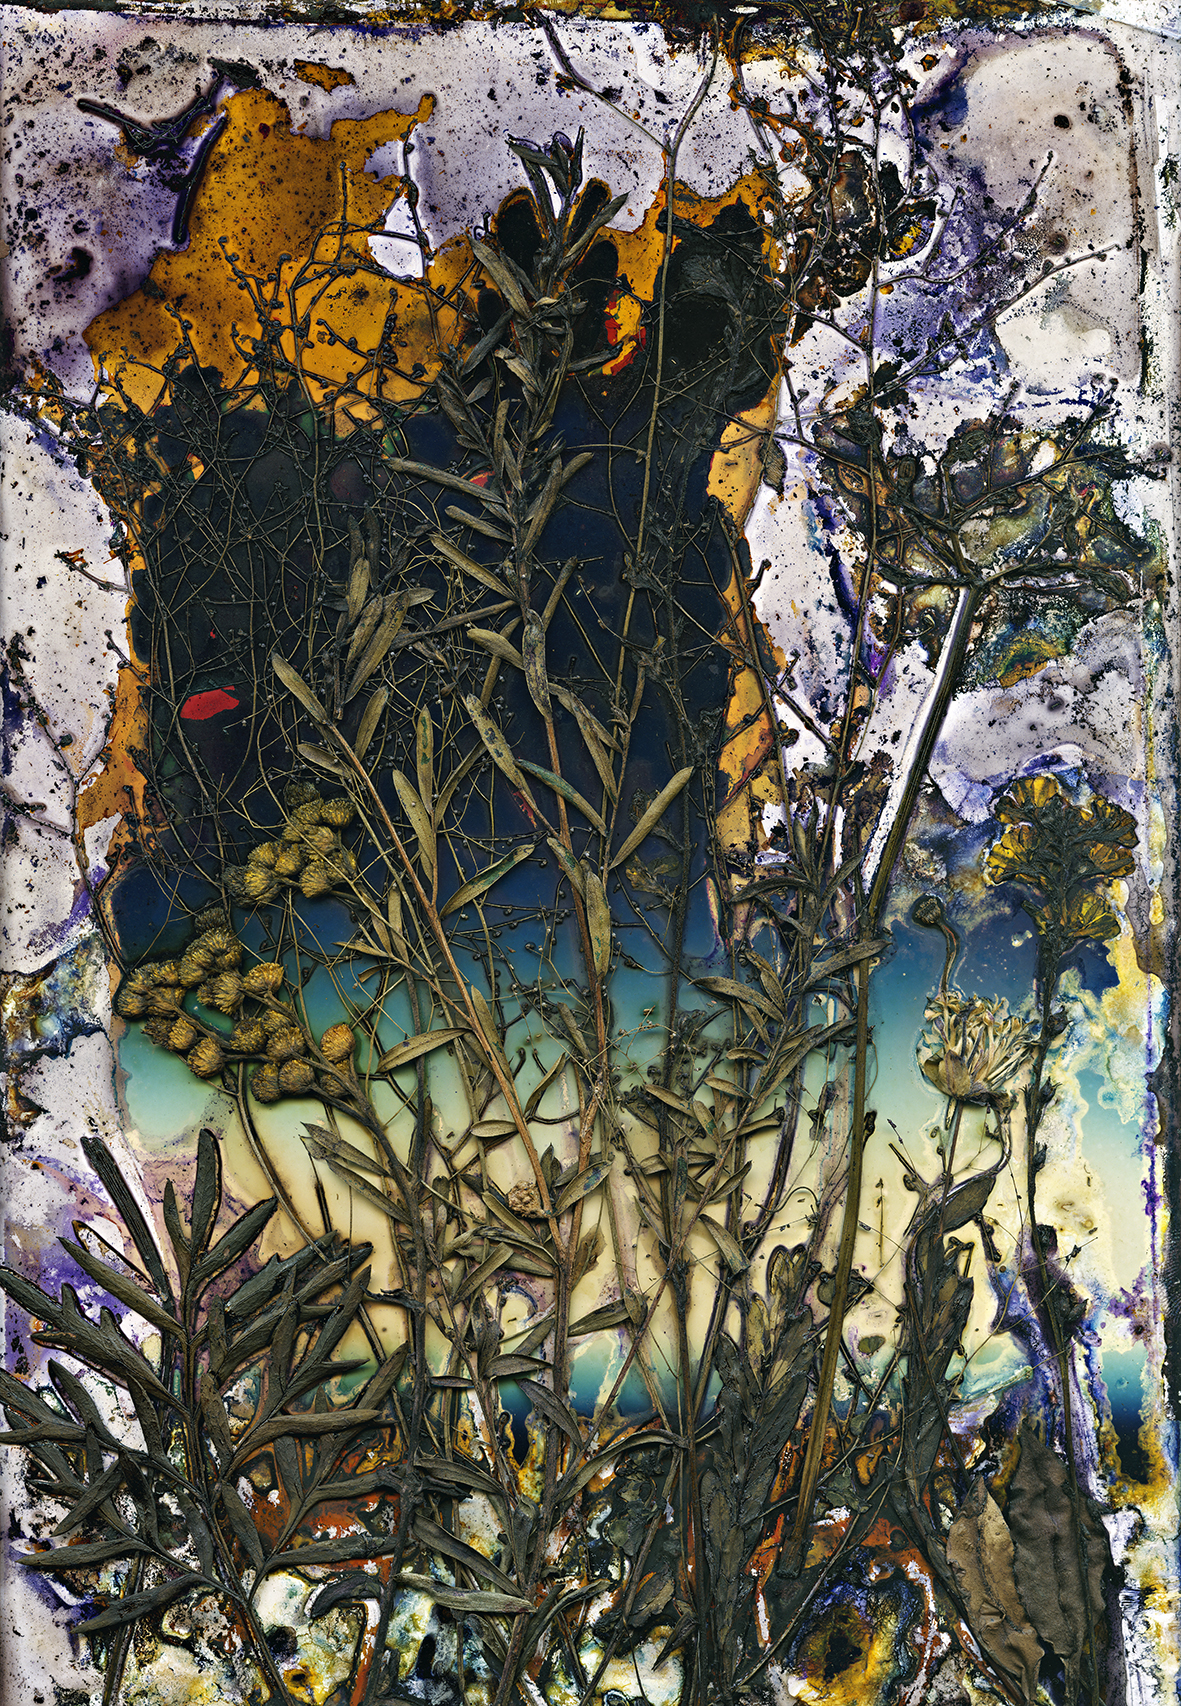 Wildflowers of the Granite Belt: Out of Oblivion | Renata Buziak